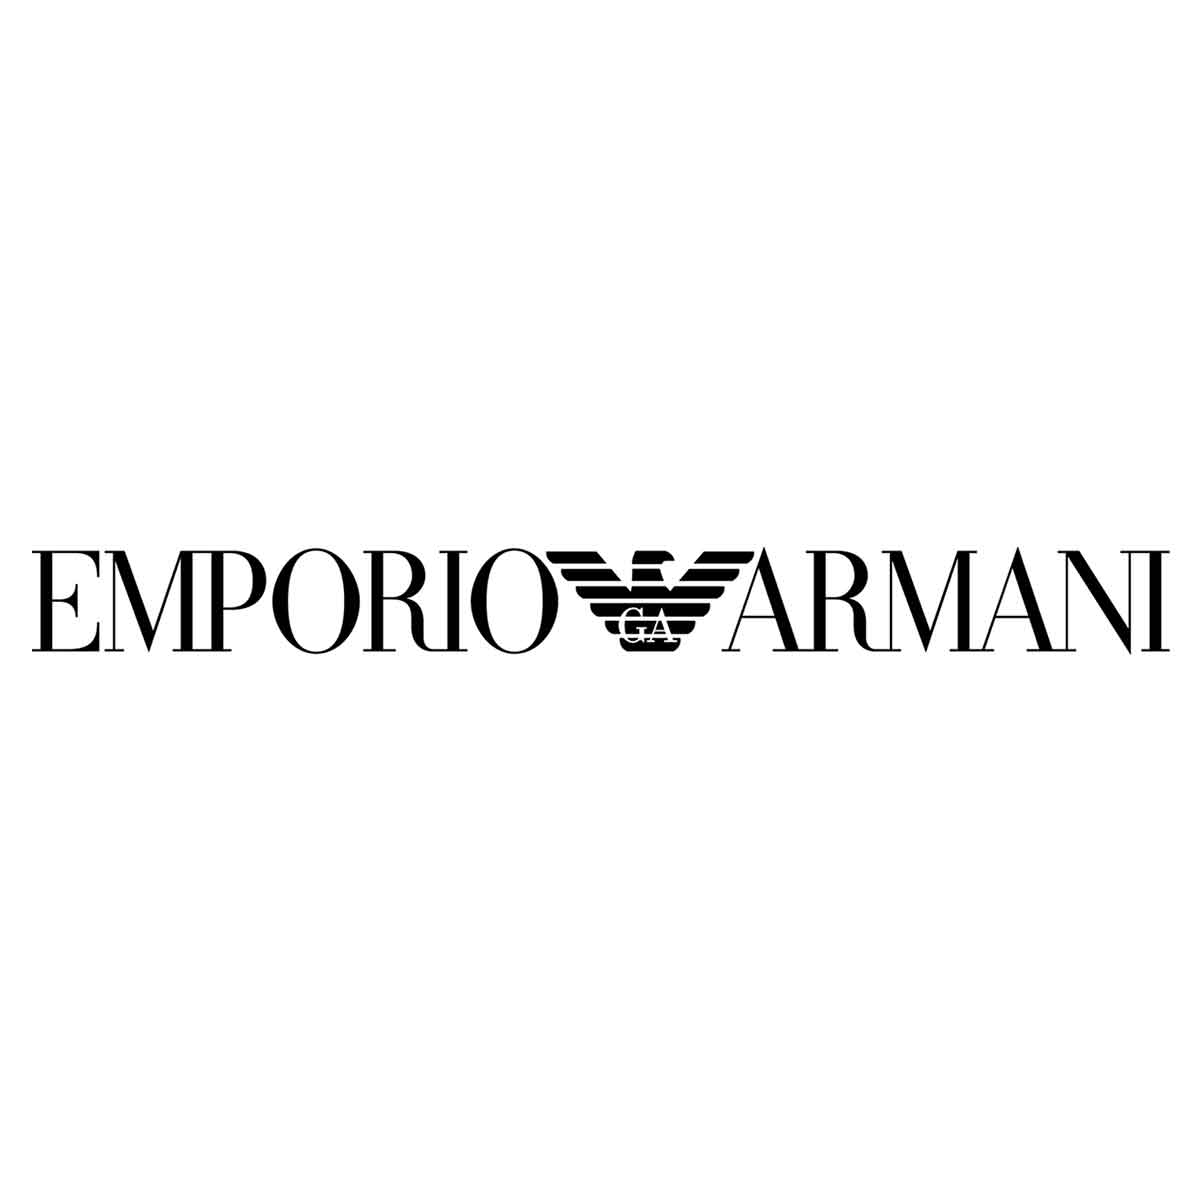 Flash Sale Anmeldung - Emporio Armani